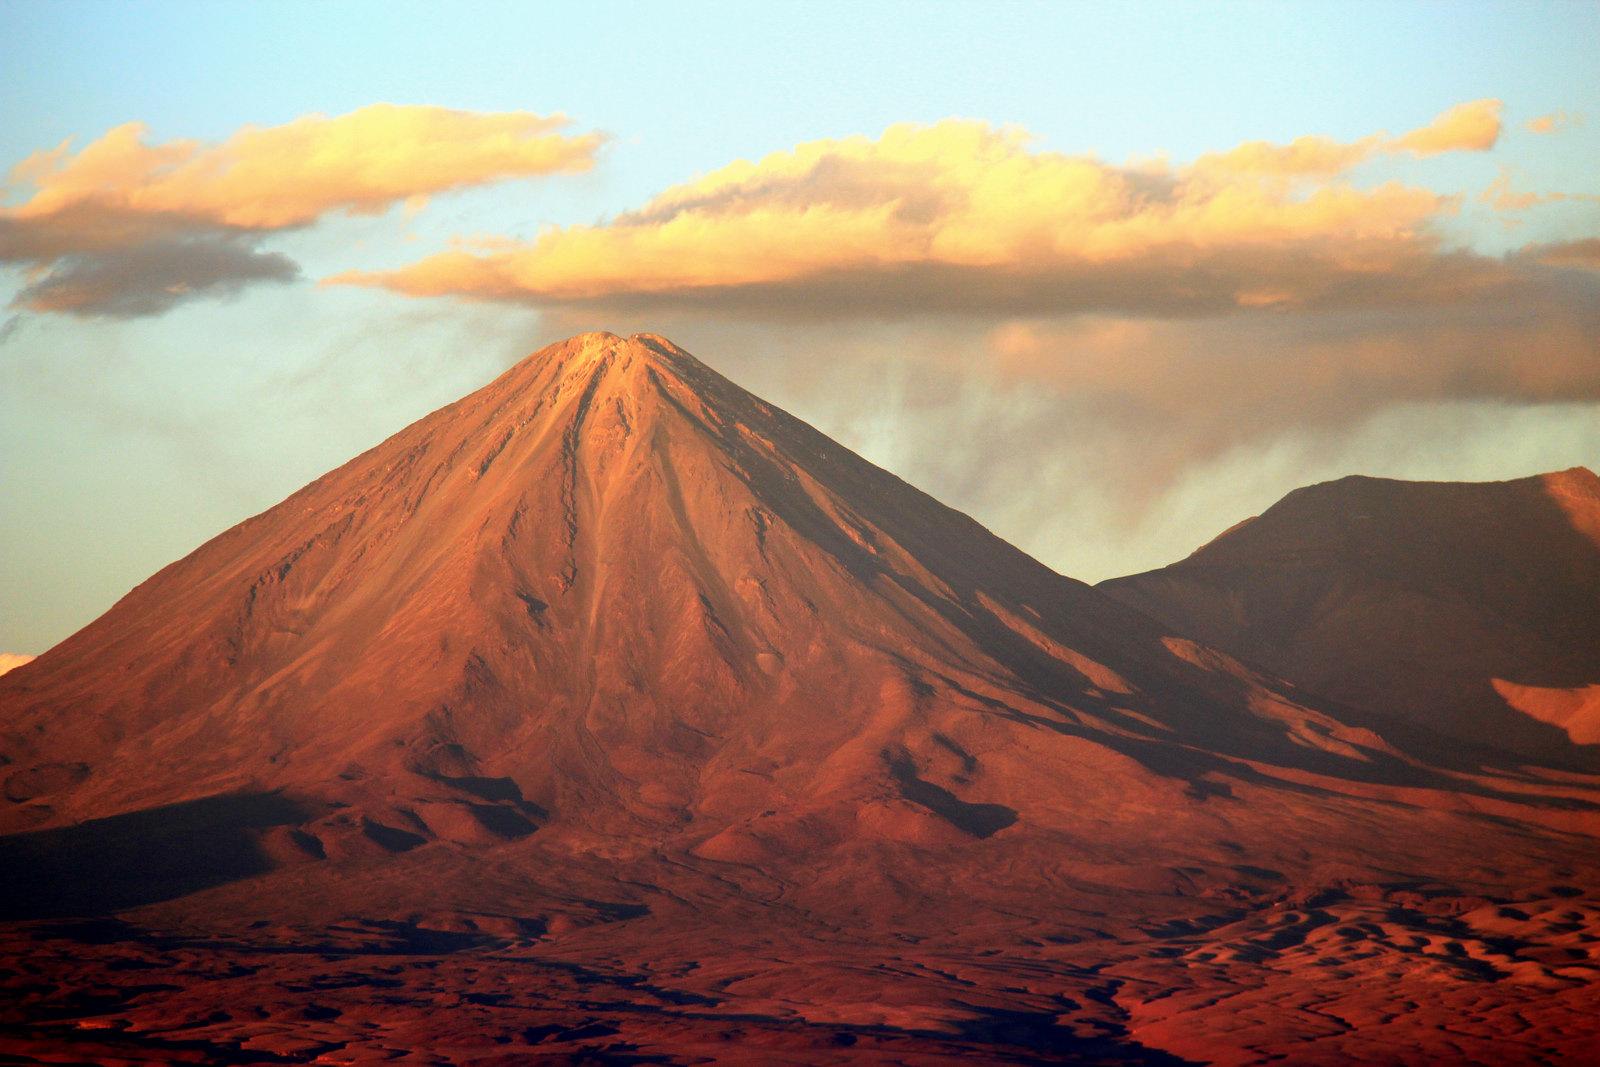 At 2,400 metres above sea level, the Atacama Desert is an unforgiving landscape